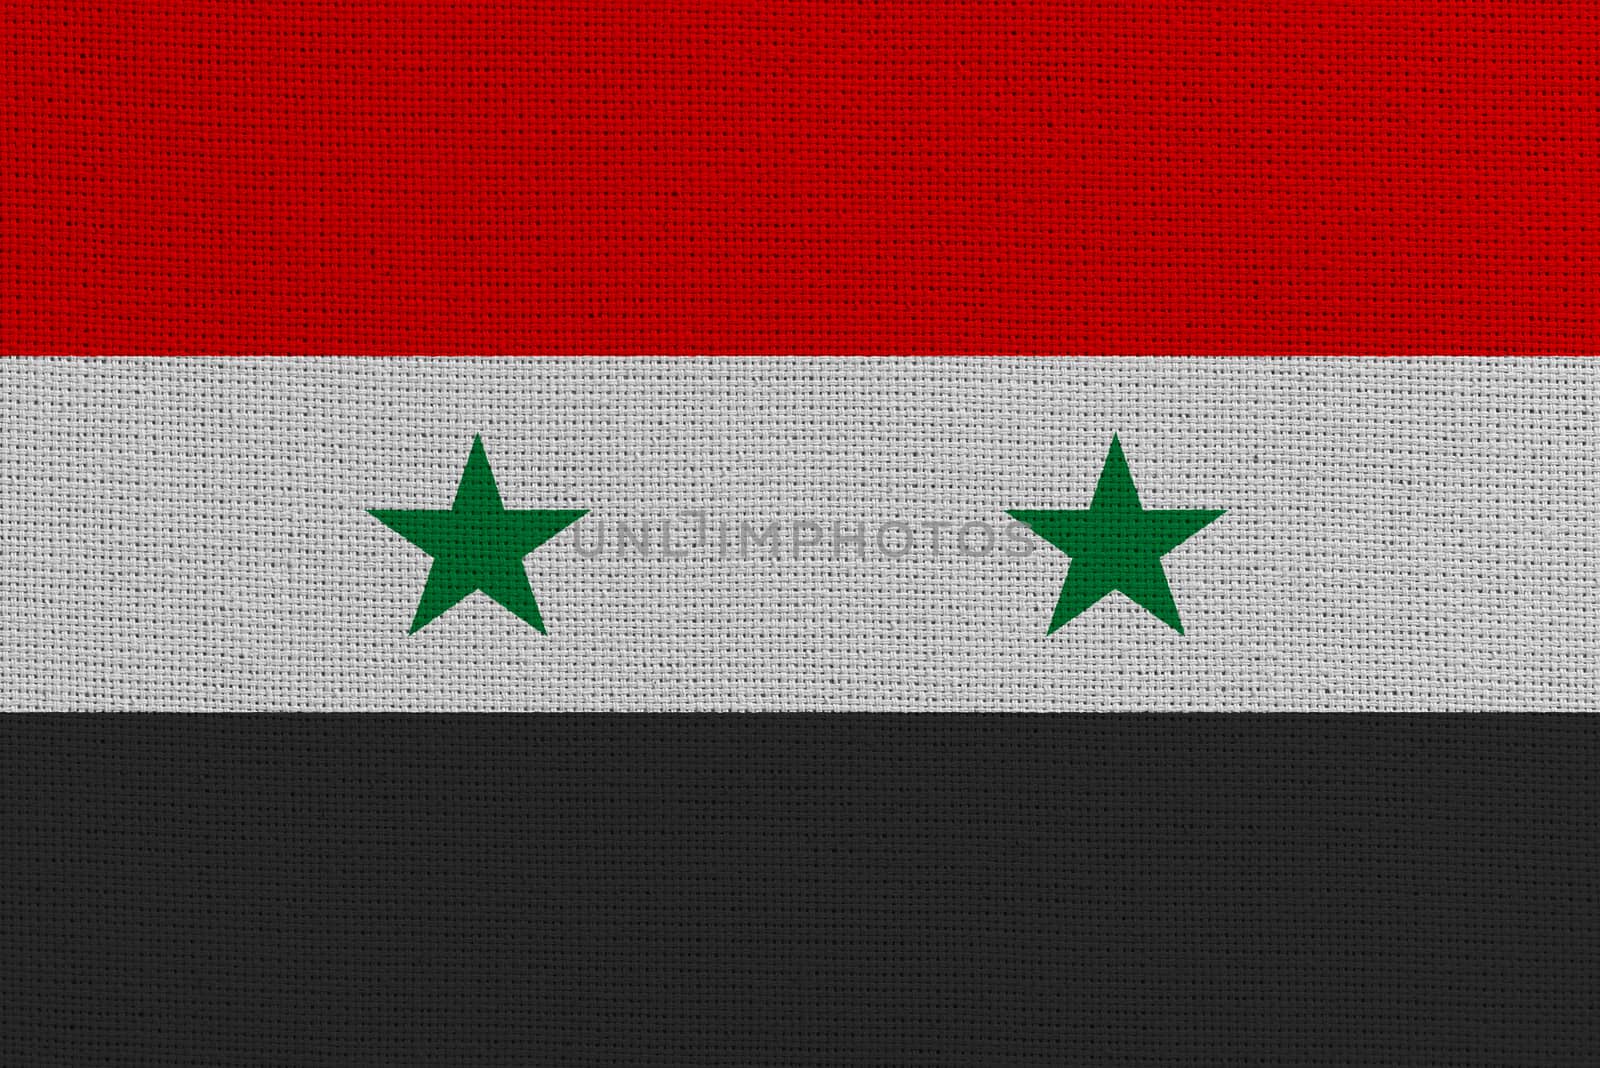 Syria fabric flag. Patriotic background. National flag of Syria